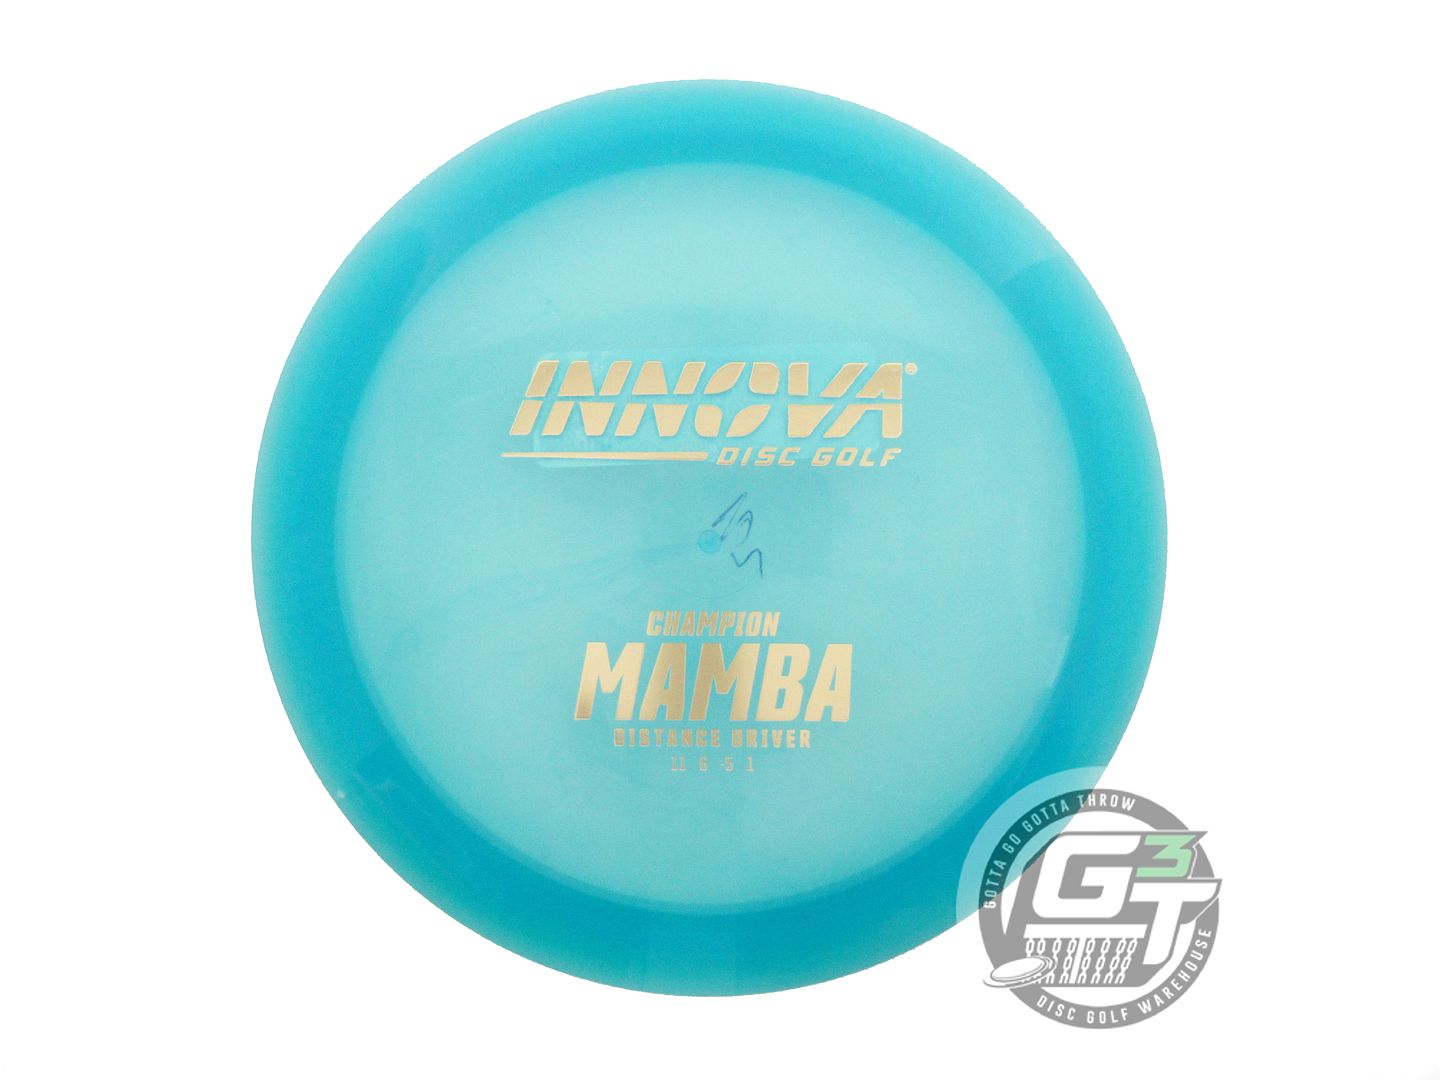 Innova Star Mamba Distance Driver Golf Disc (Individually Listed)